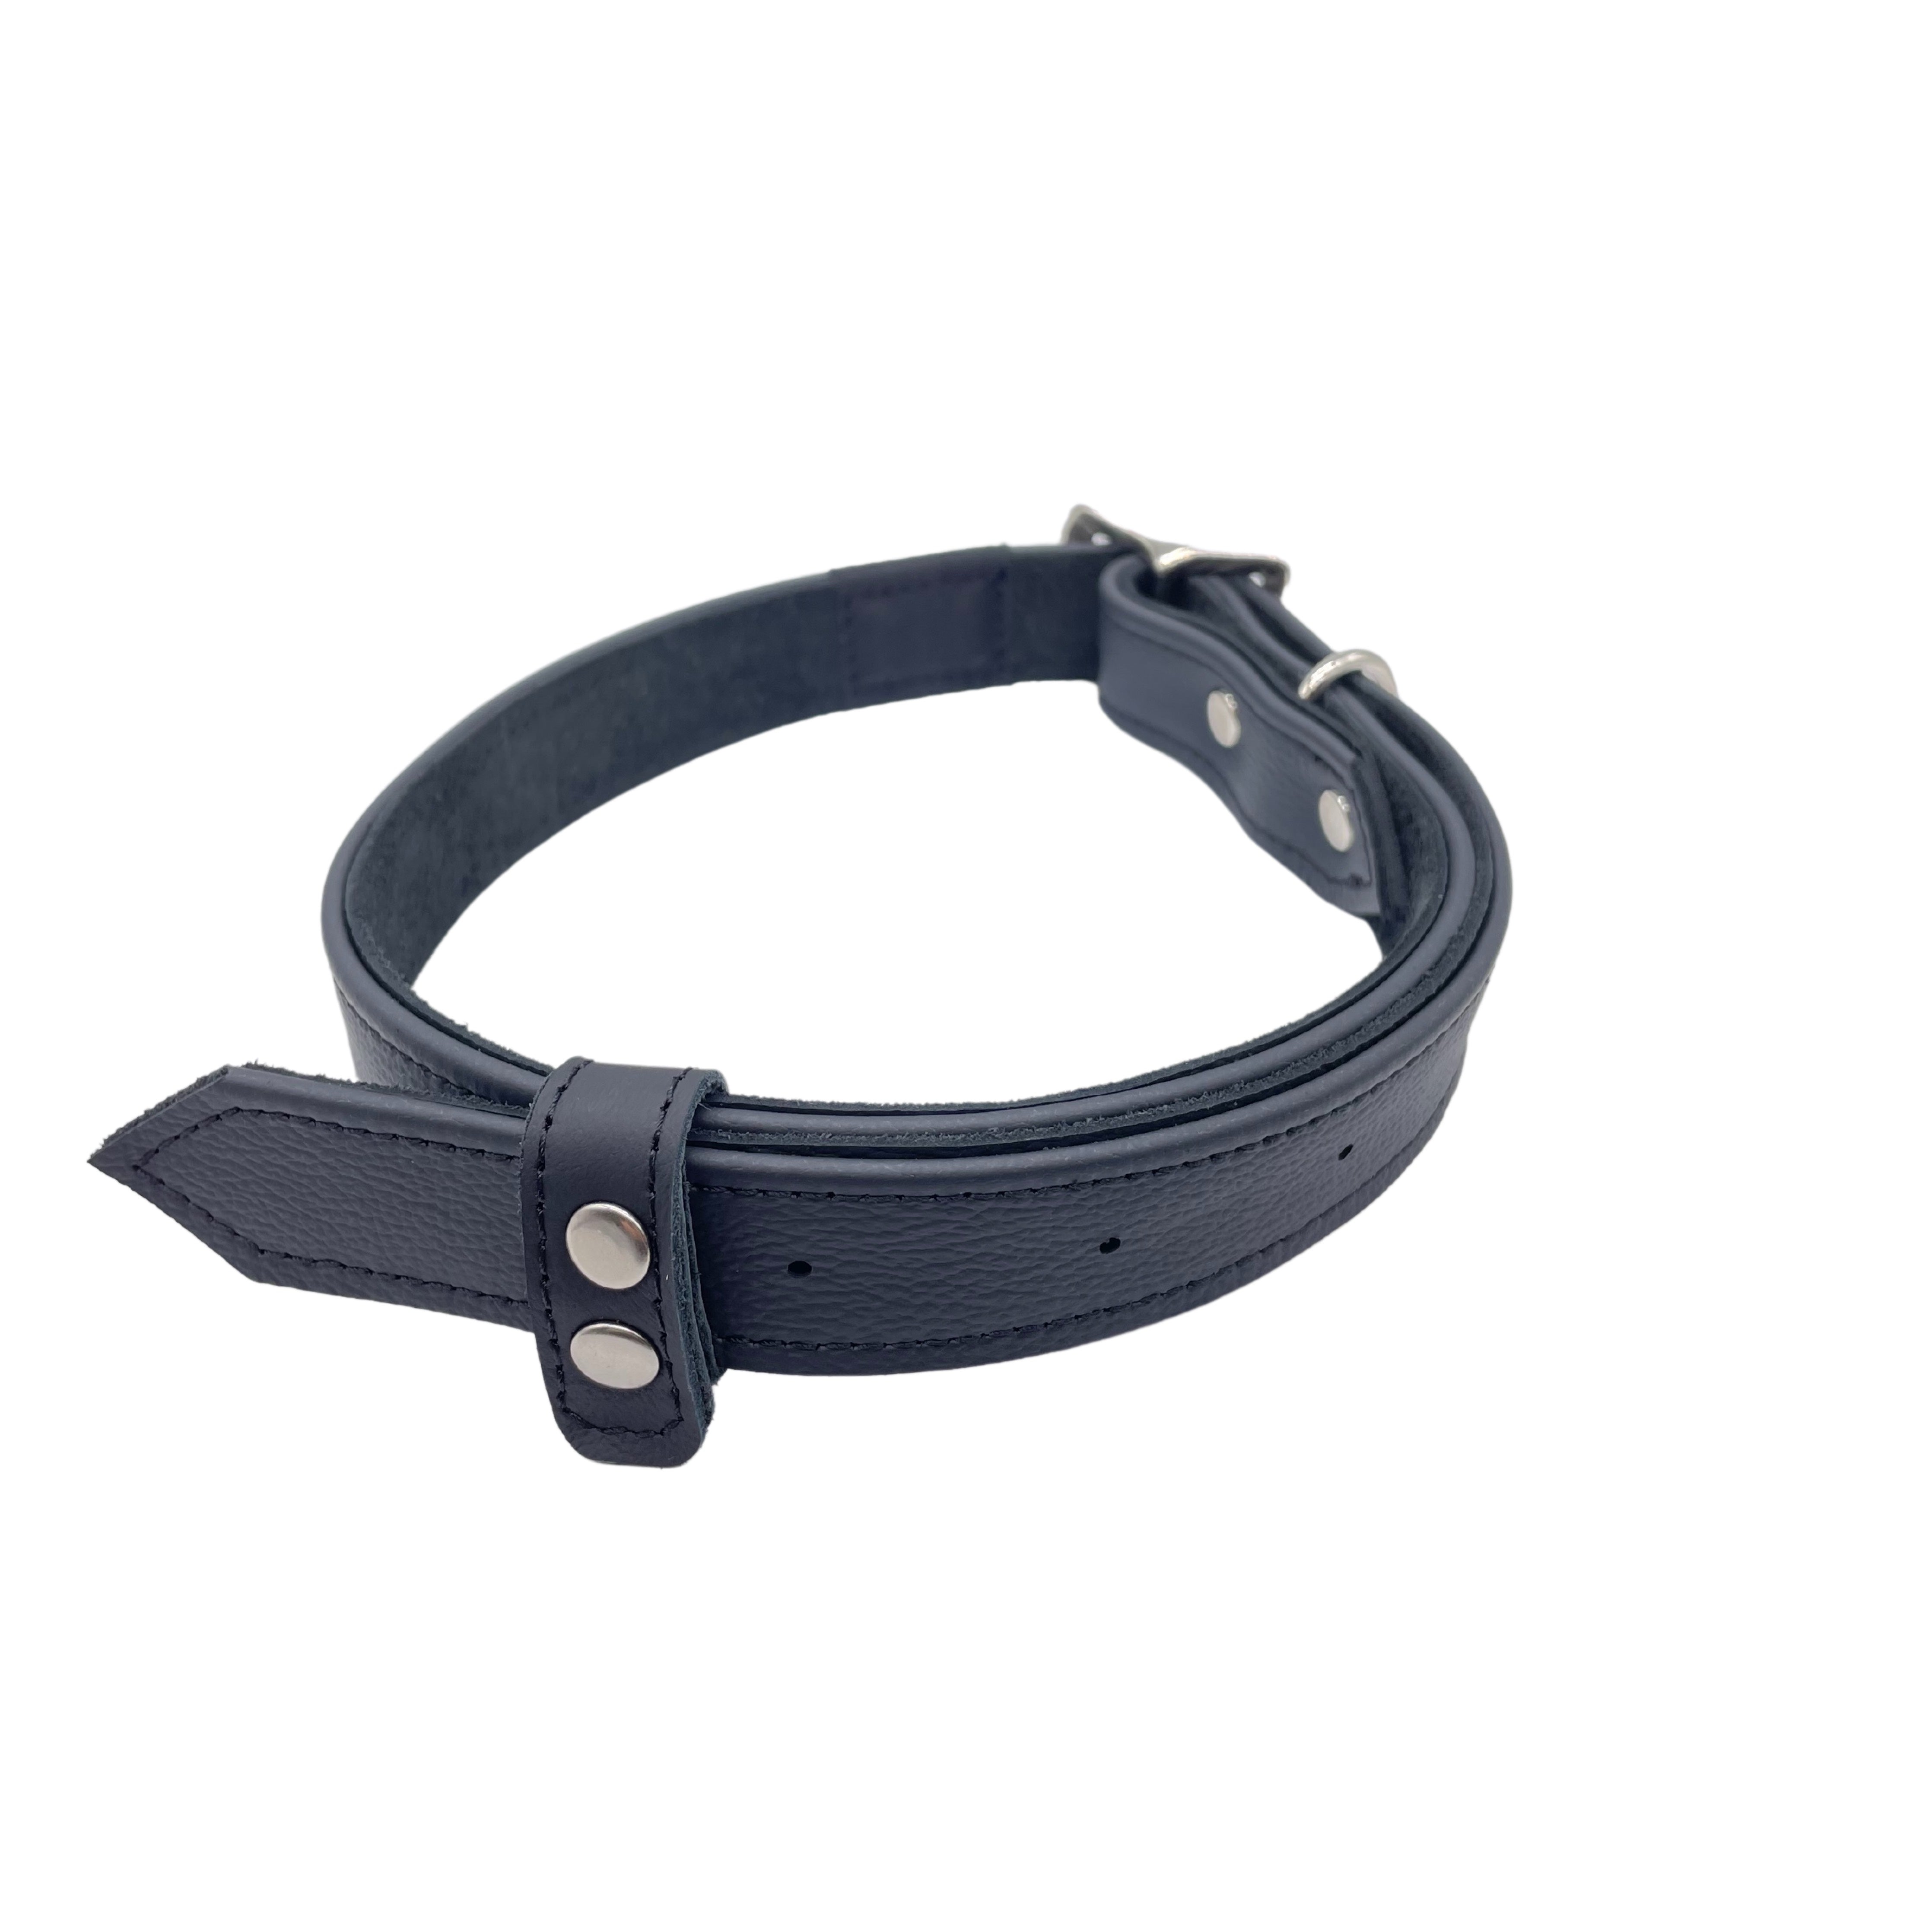 Pingree's Junkyard dog collar detail highlighting leather loop and American made rivets.